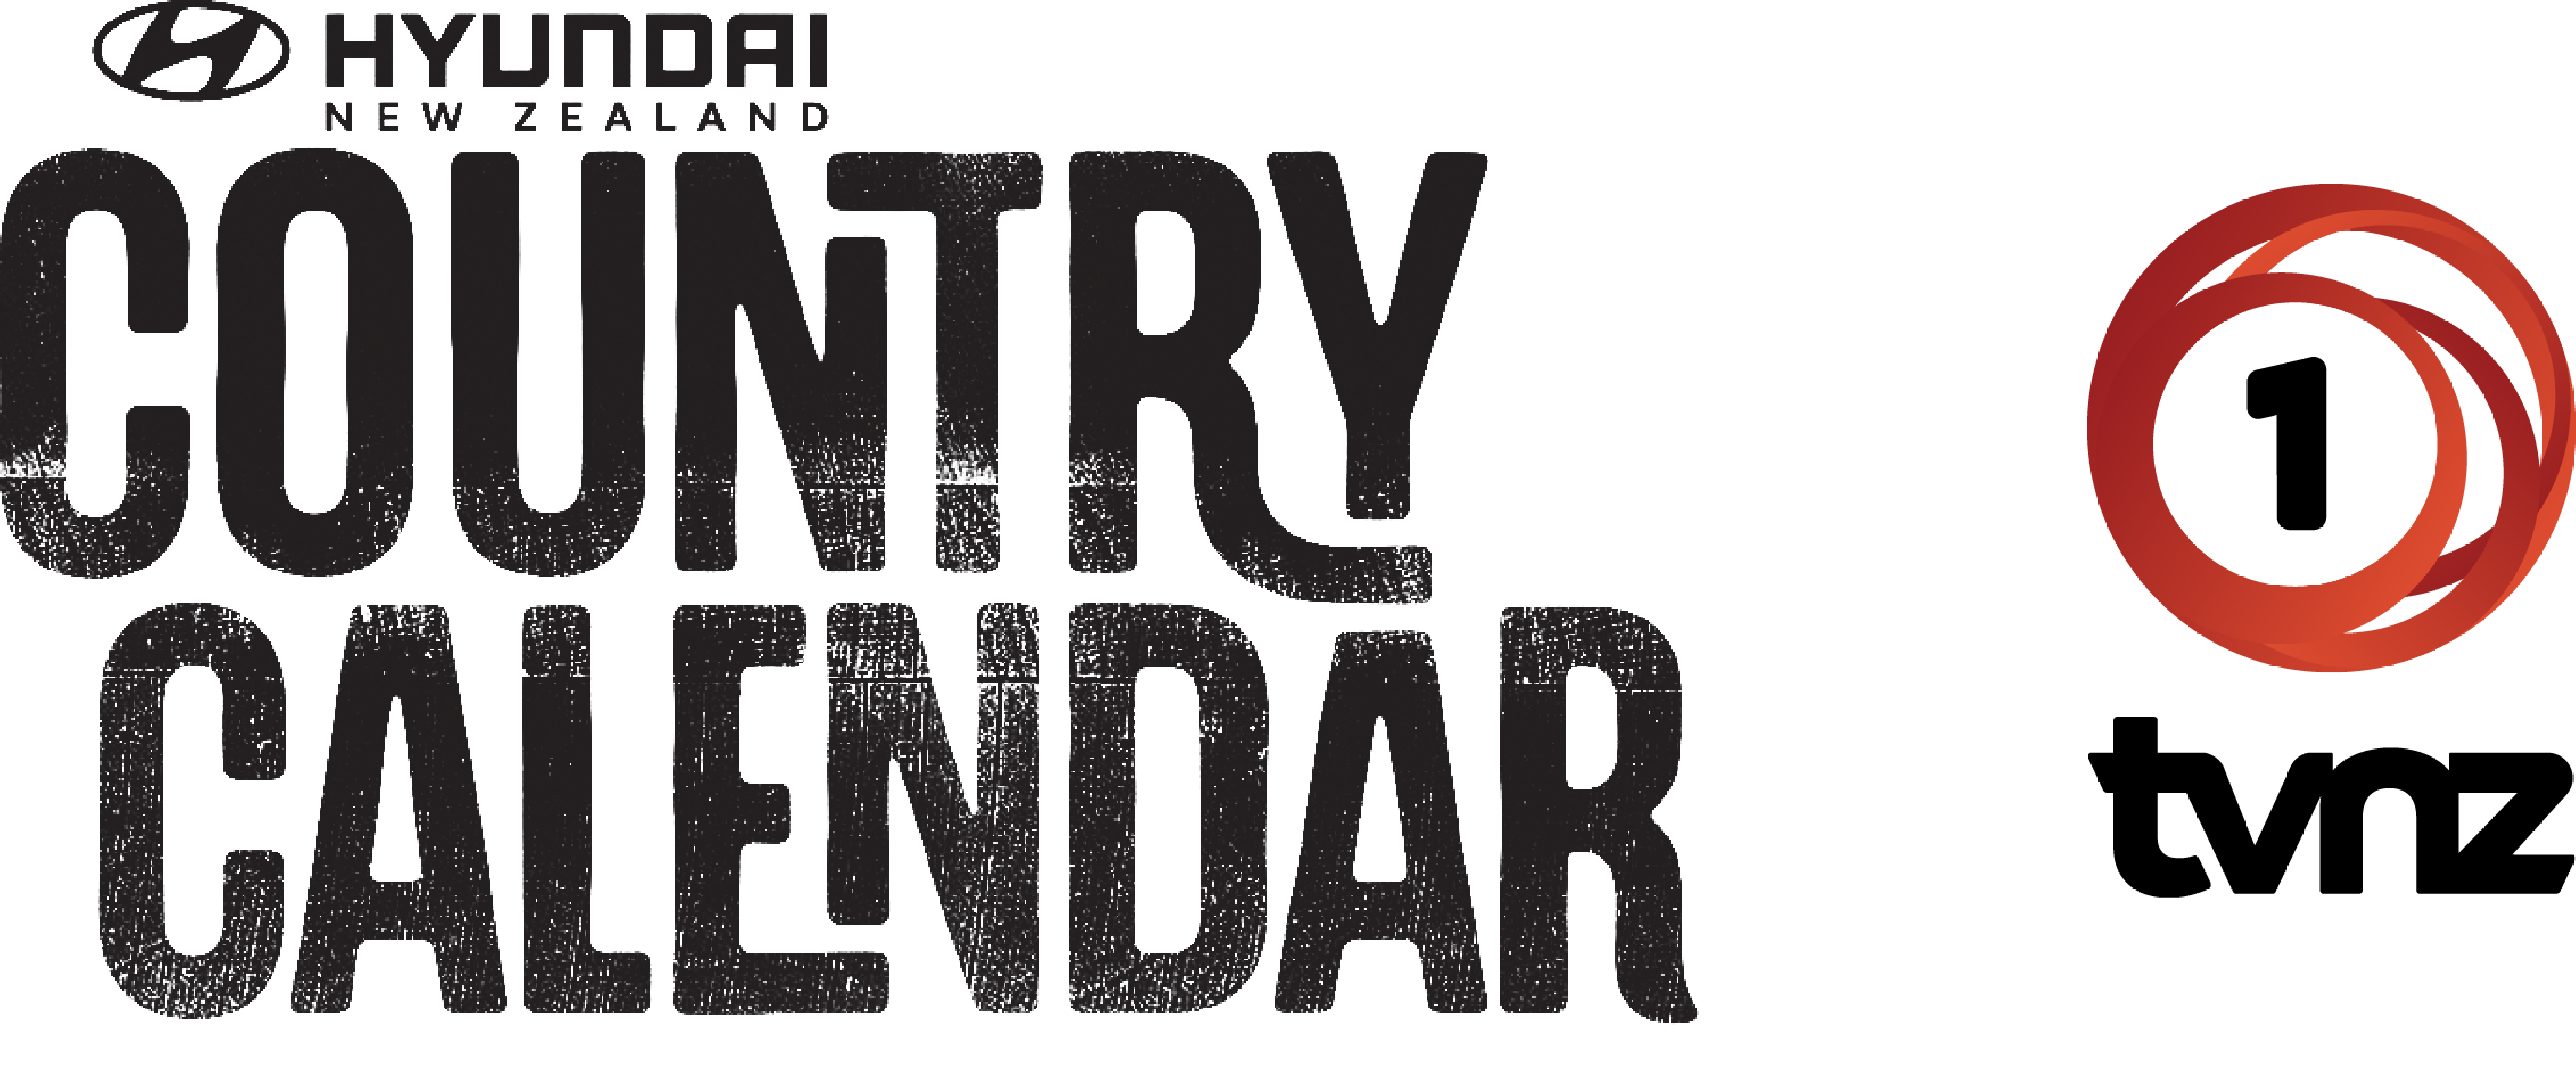 Country Calendar Competition Hyundai NZ